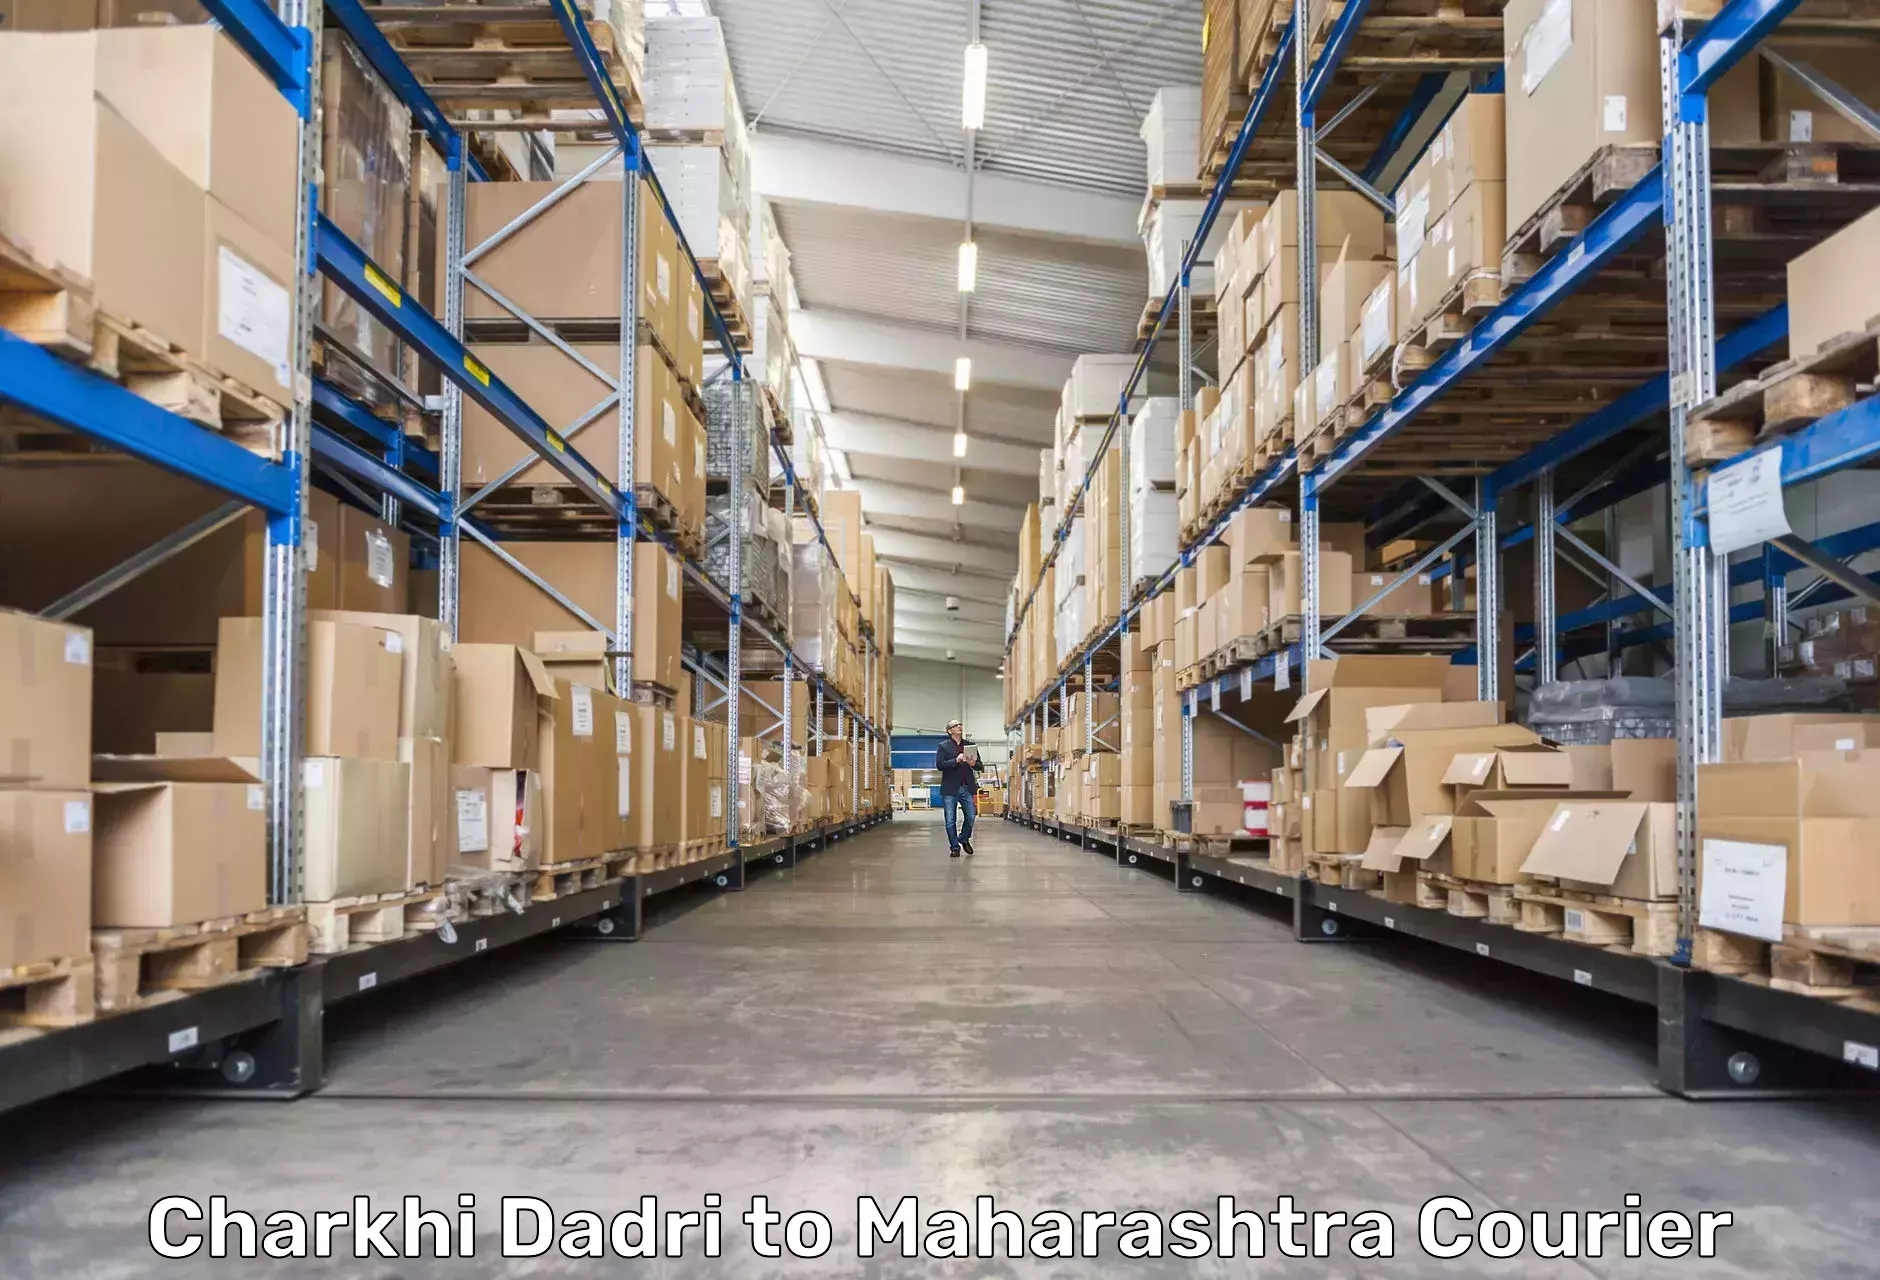 Global shipping networks Charkhi Dadri to Kavathe Mahankal